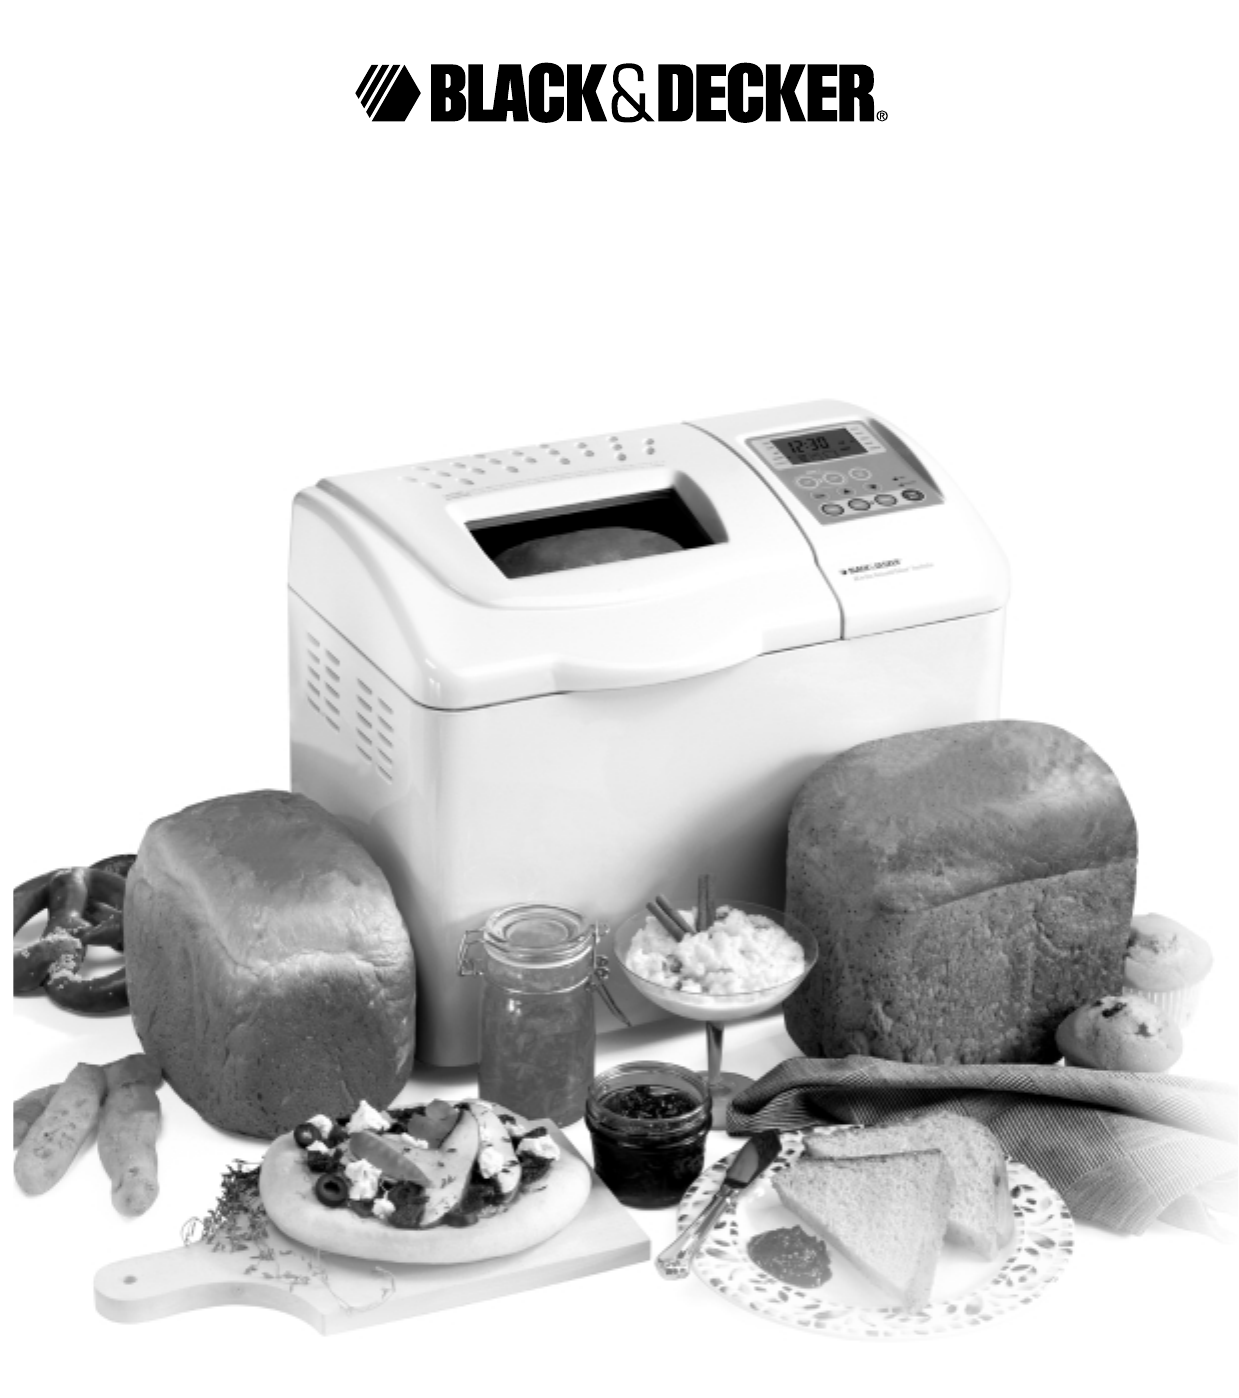 BLACK & DECKER ALL-IN-ONE BREAD MACHINE